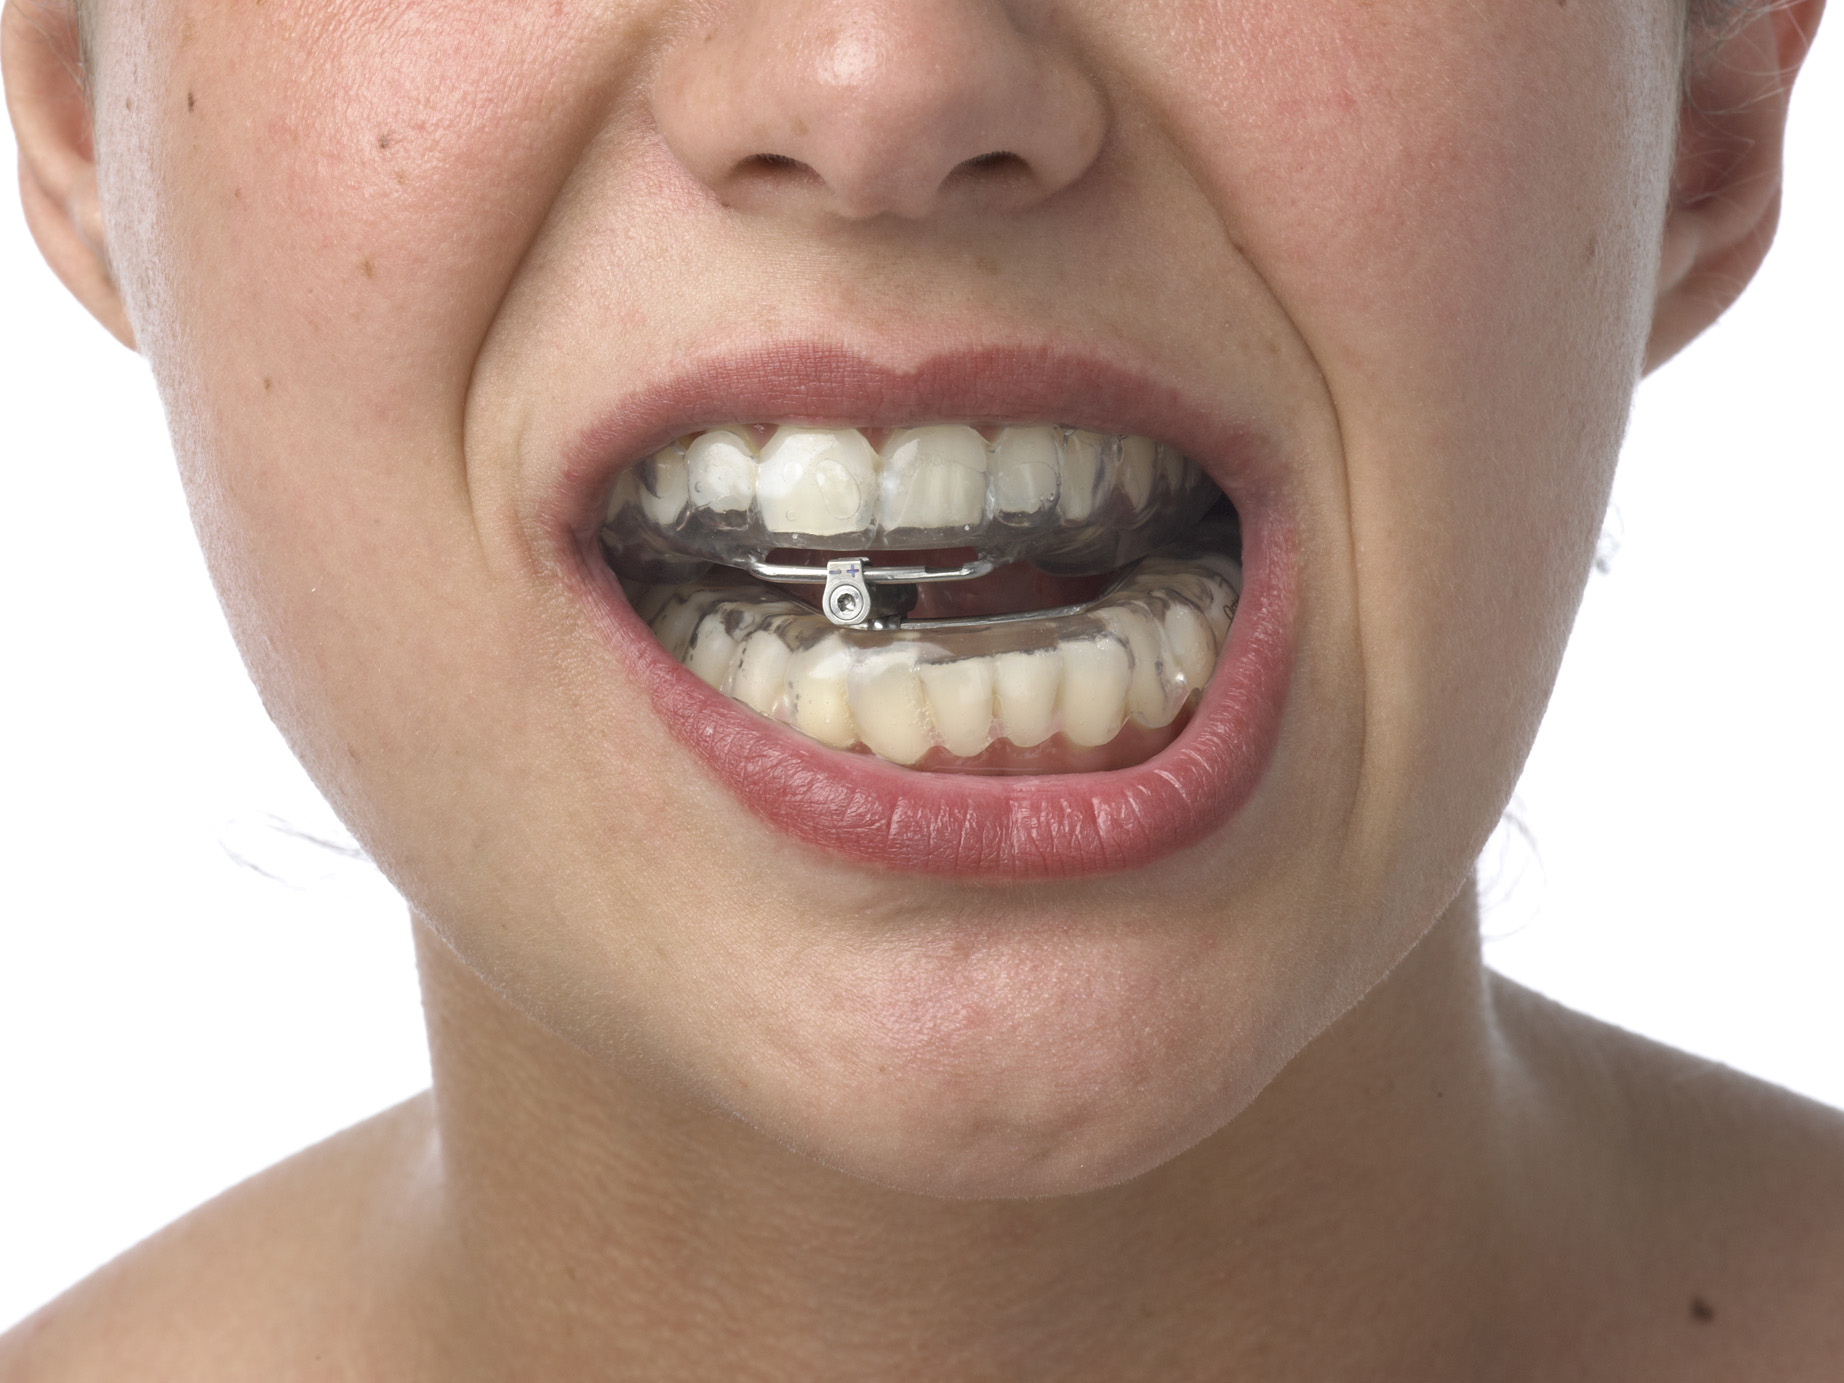 File:Dispositivo de avance mandibular Orthoapnea.jpg - Wikimedia